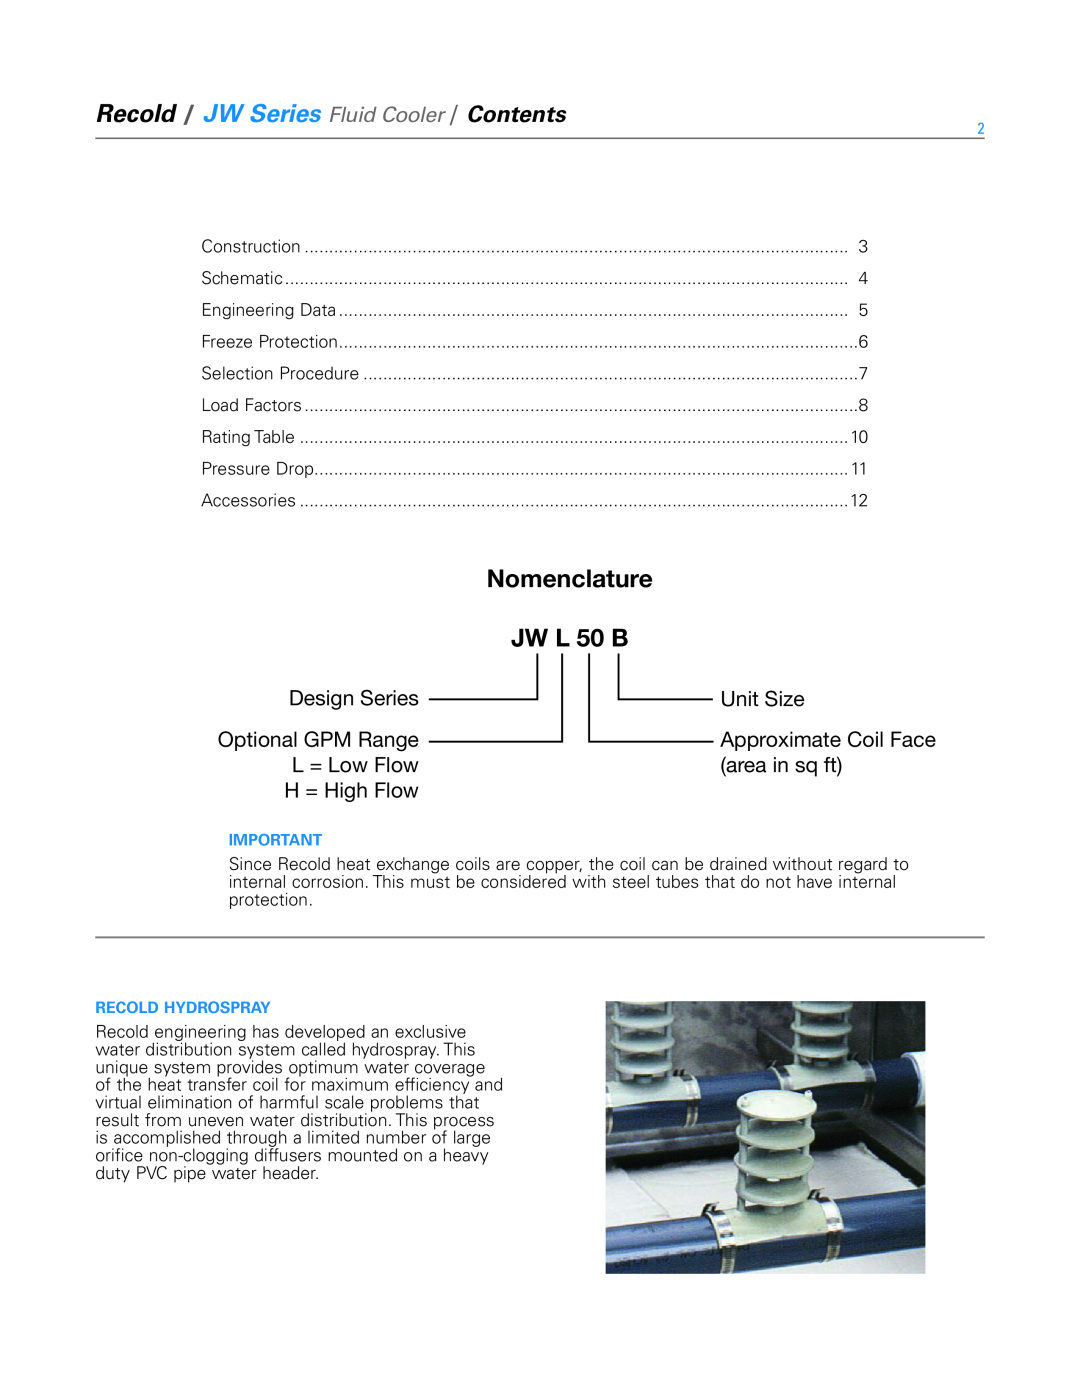 SPX Cooling Technologies manual Recold / JW Series Fluid Cooler / Contents, Nomenclature JW L 50 B, H = High Flow 